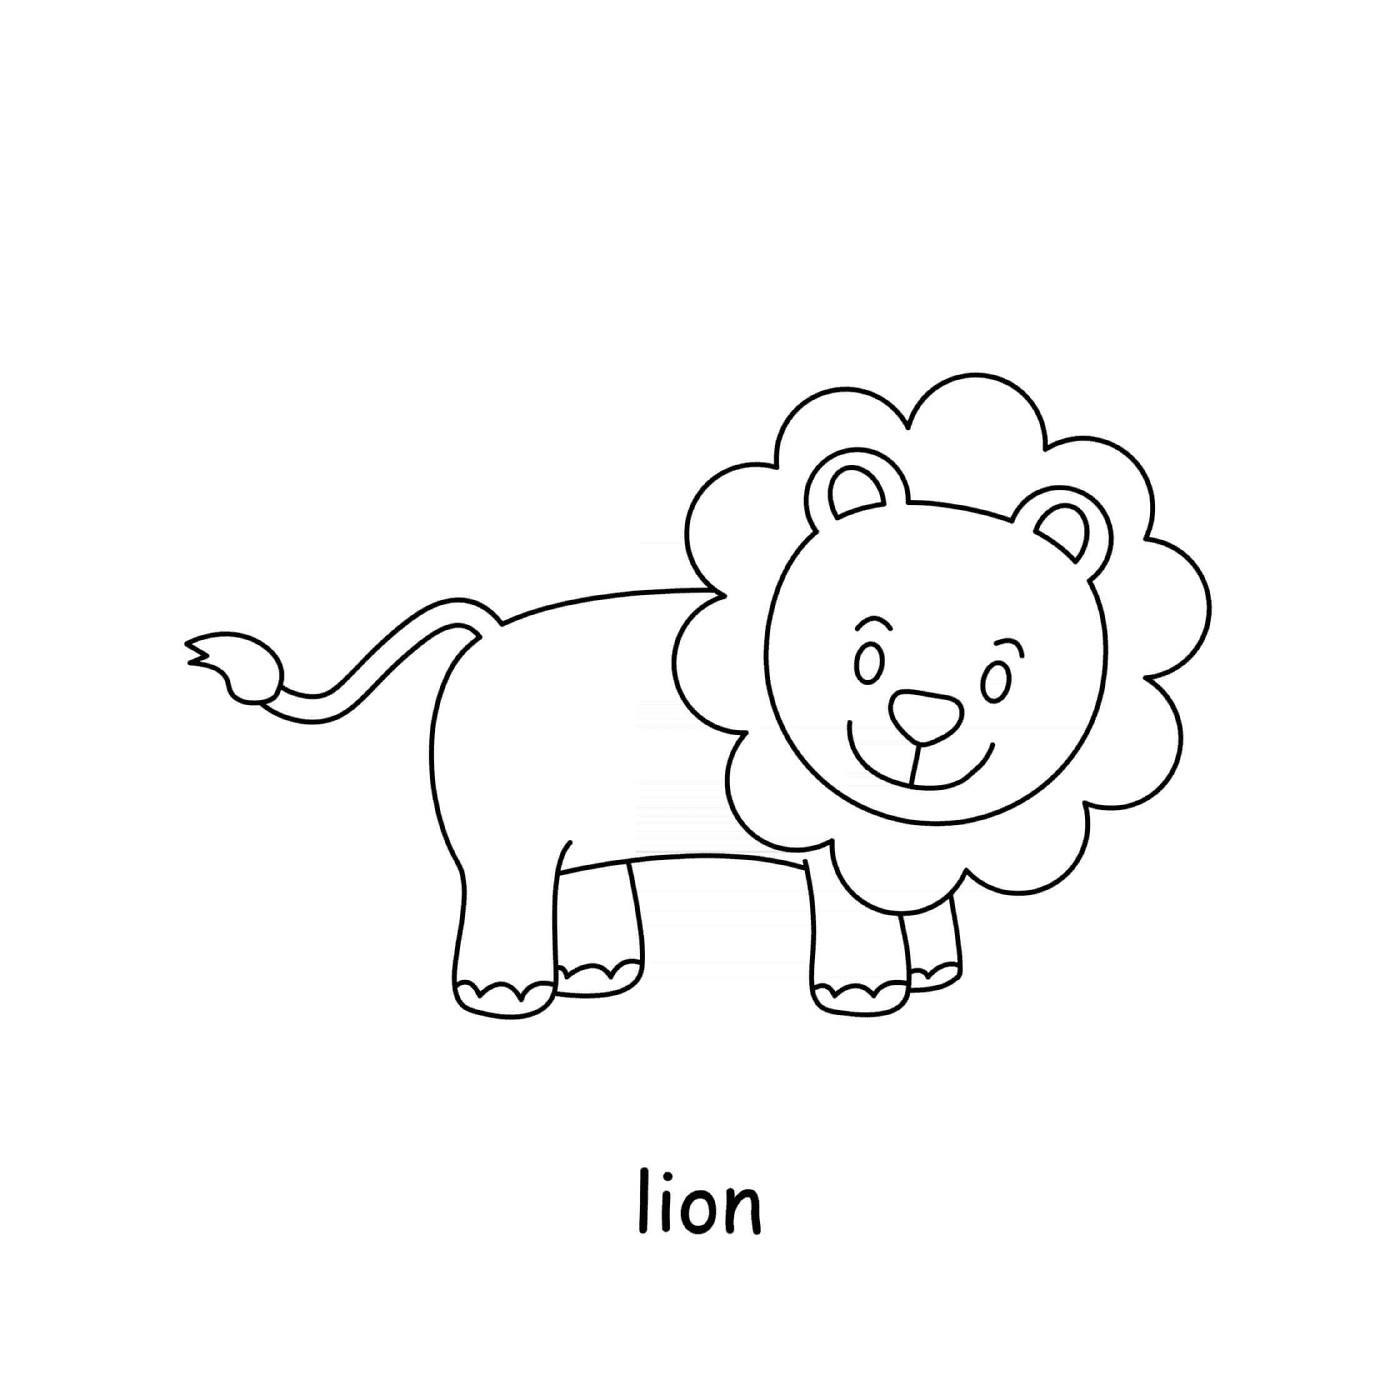  leão animal selvagem 